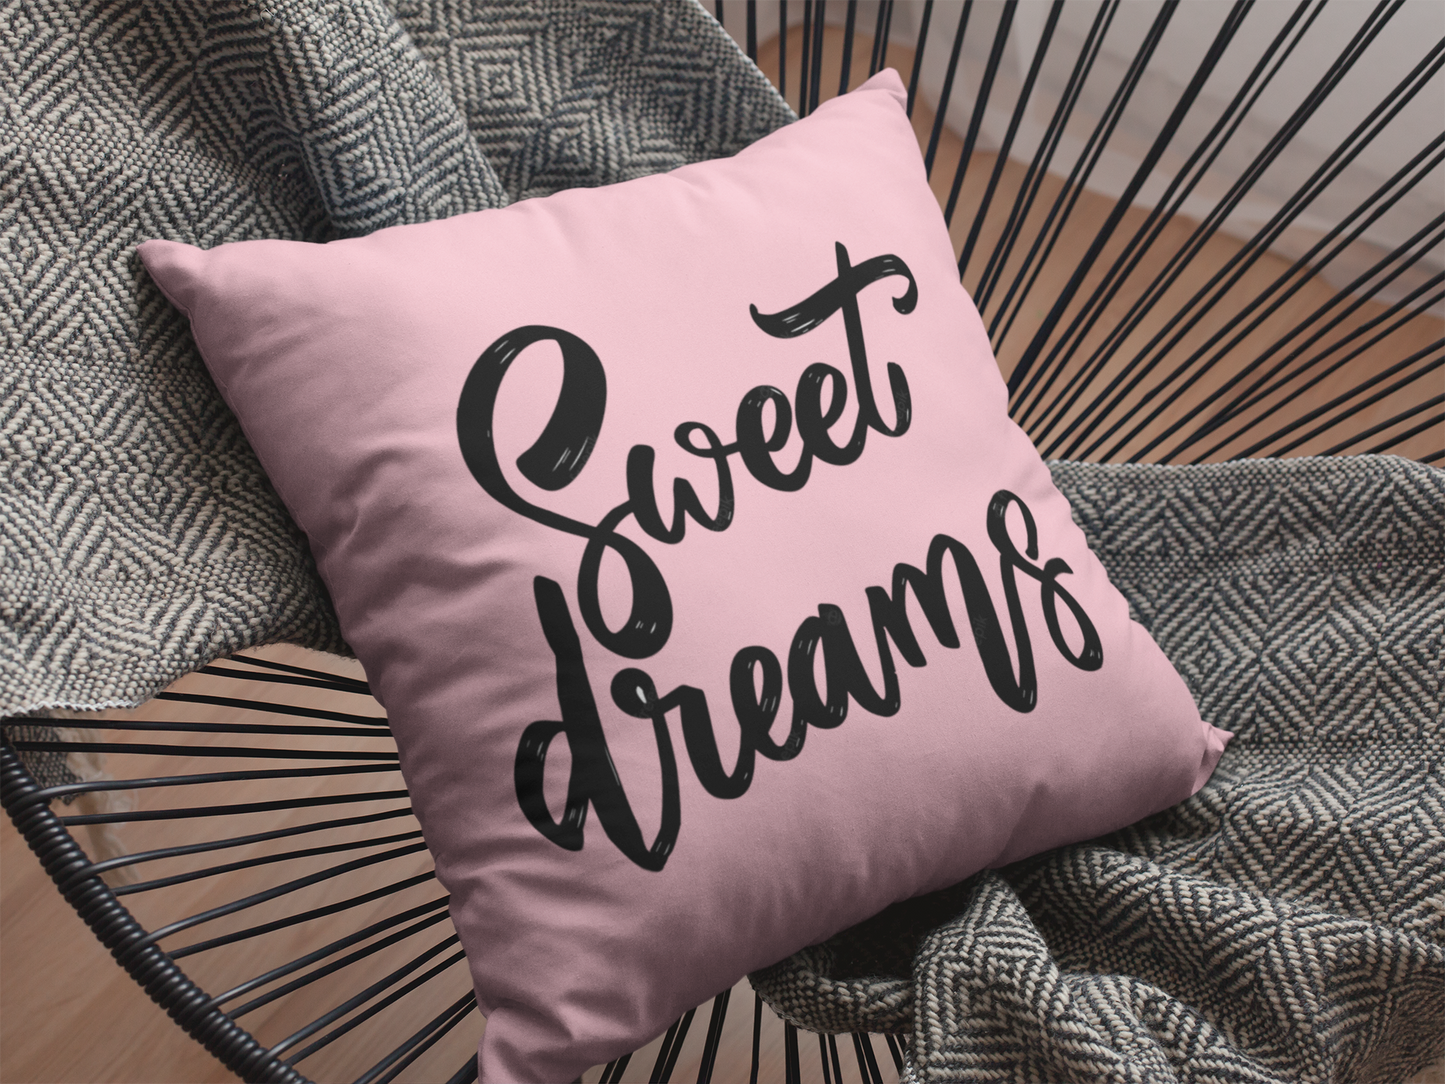 Sweet dreams Printed Cushion